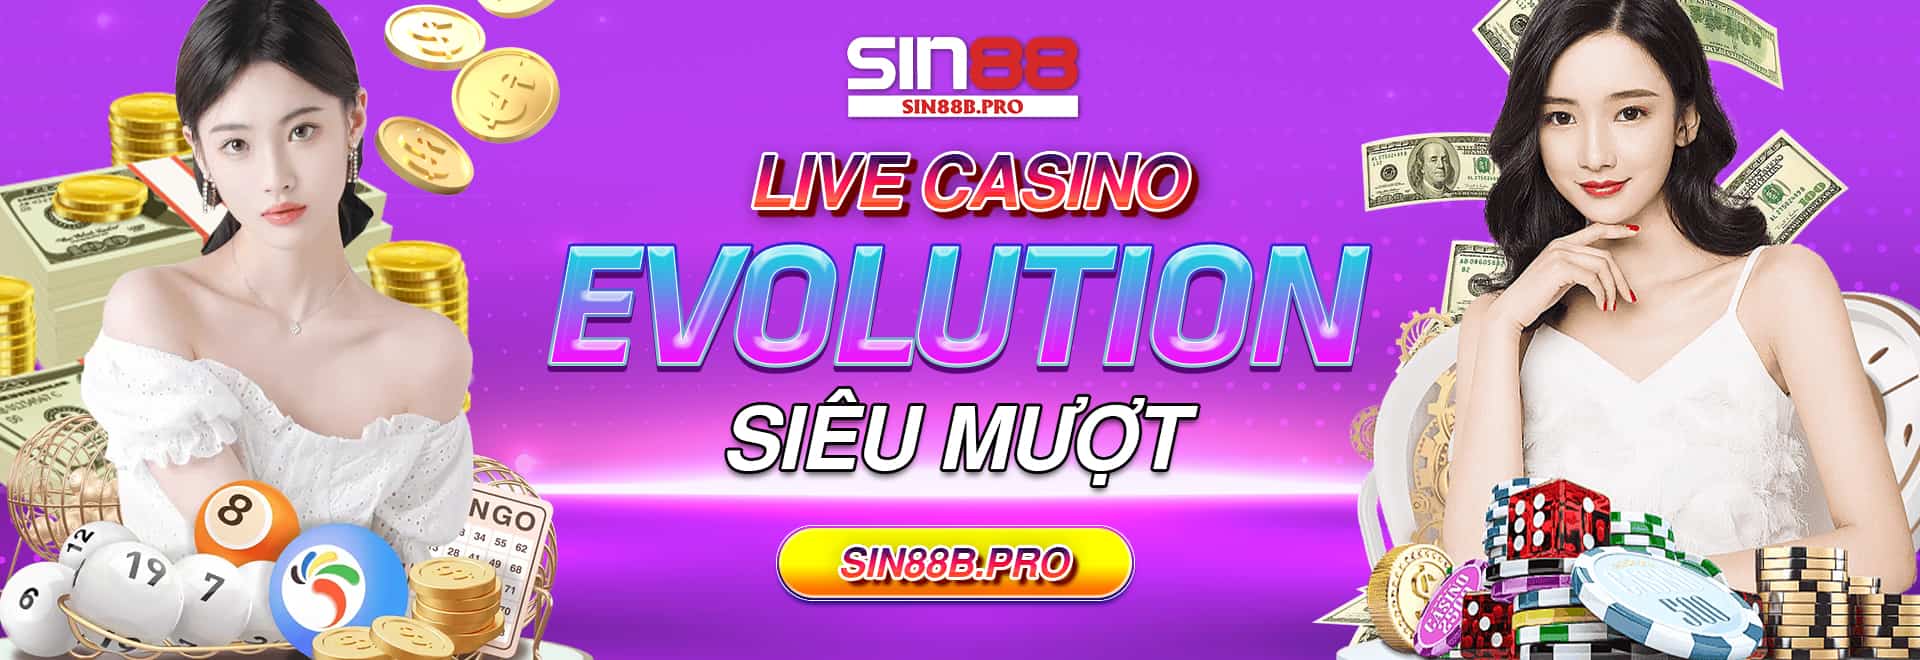 2 live casino evolution sieu muot